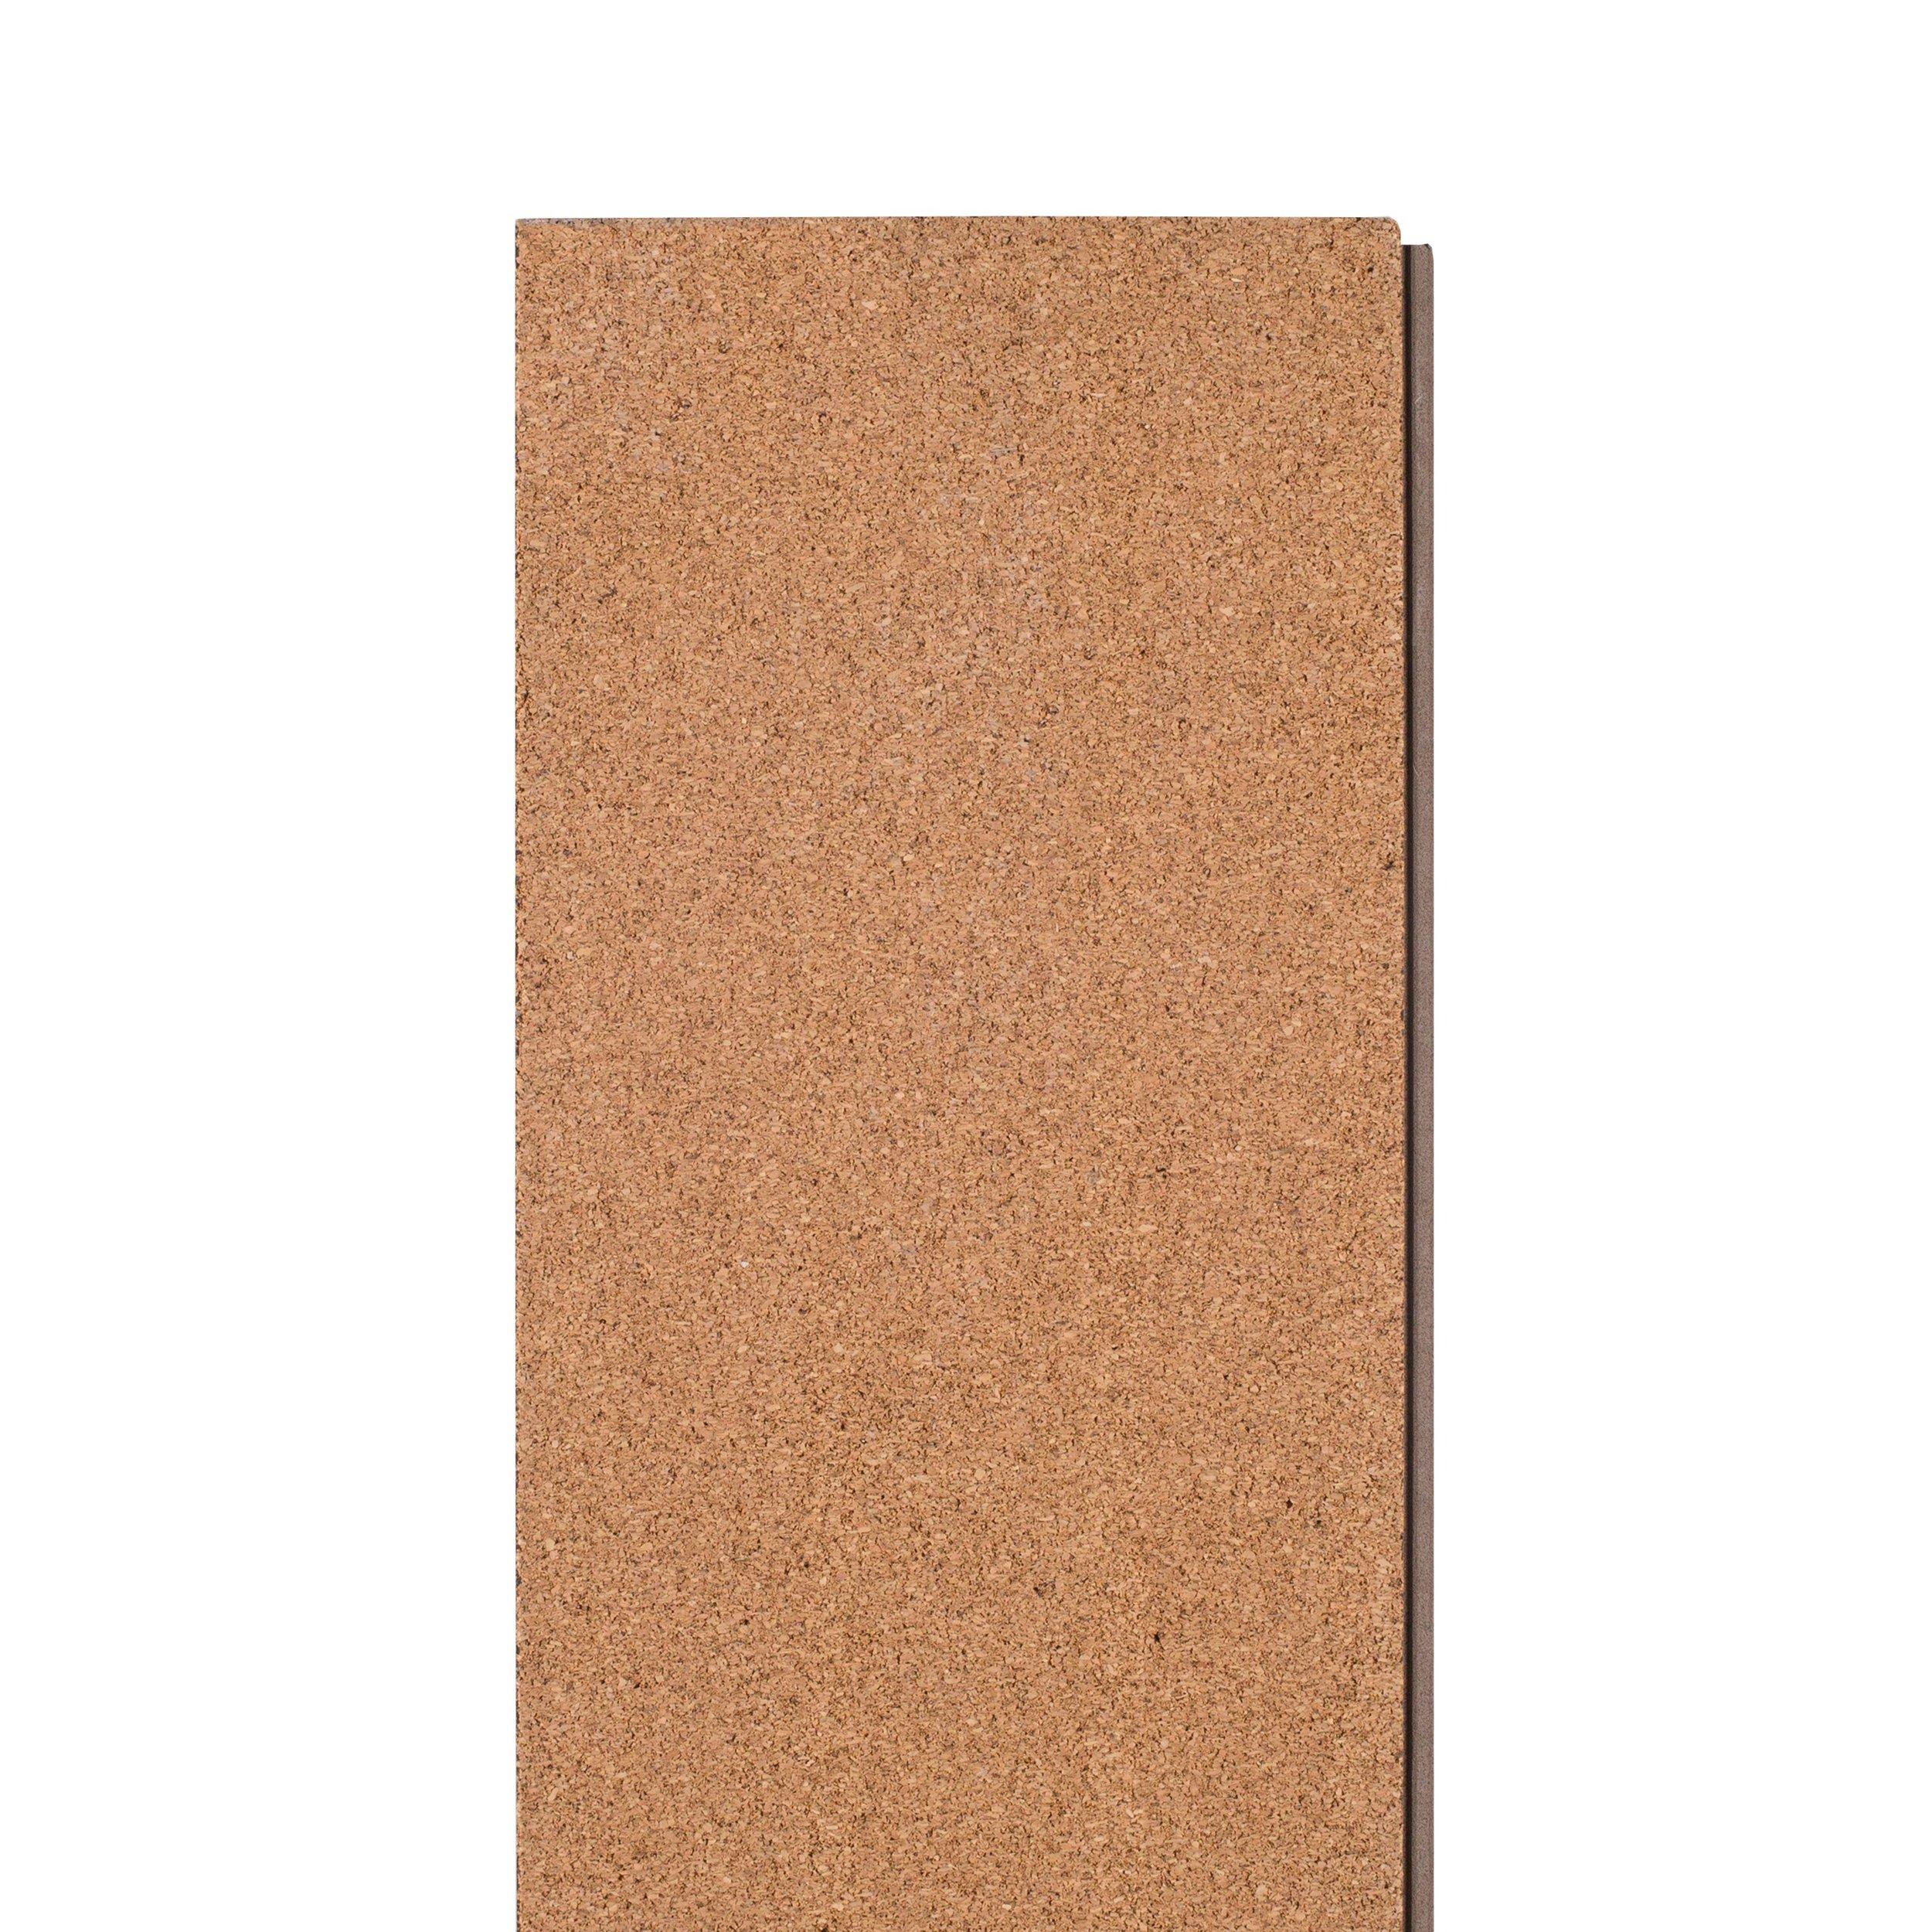 Butter Toast Rigid Core Luxury Vinyl Plank - Cork Back